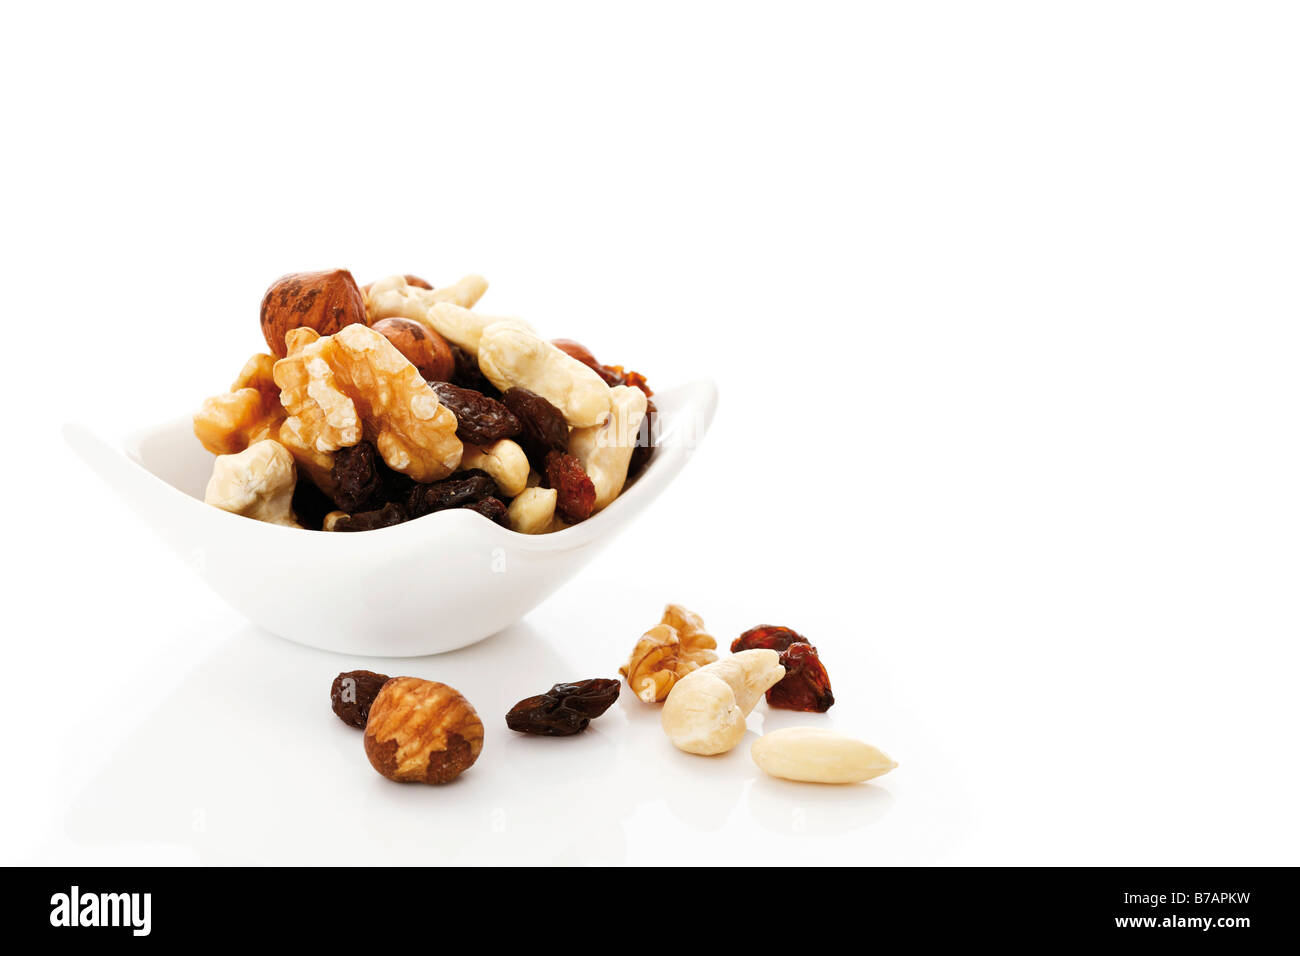 Trail mix, nuts and raisins Stock Photo